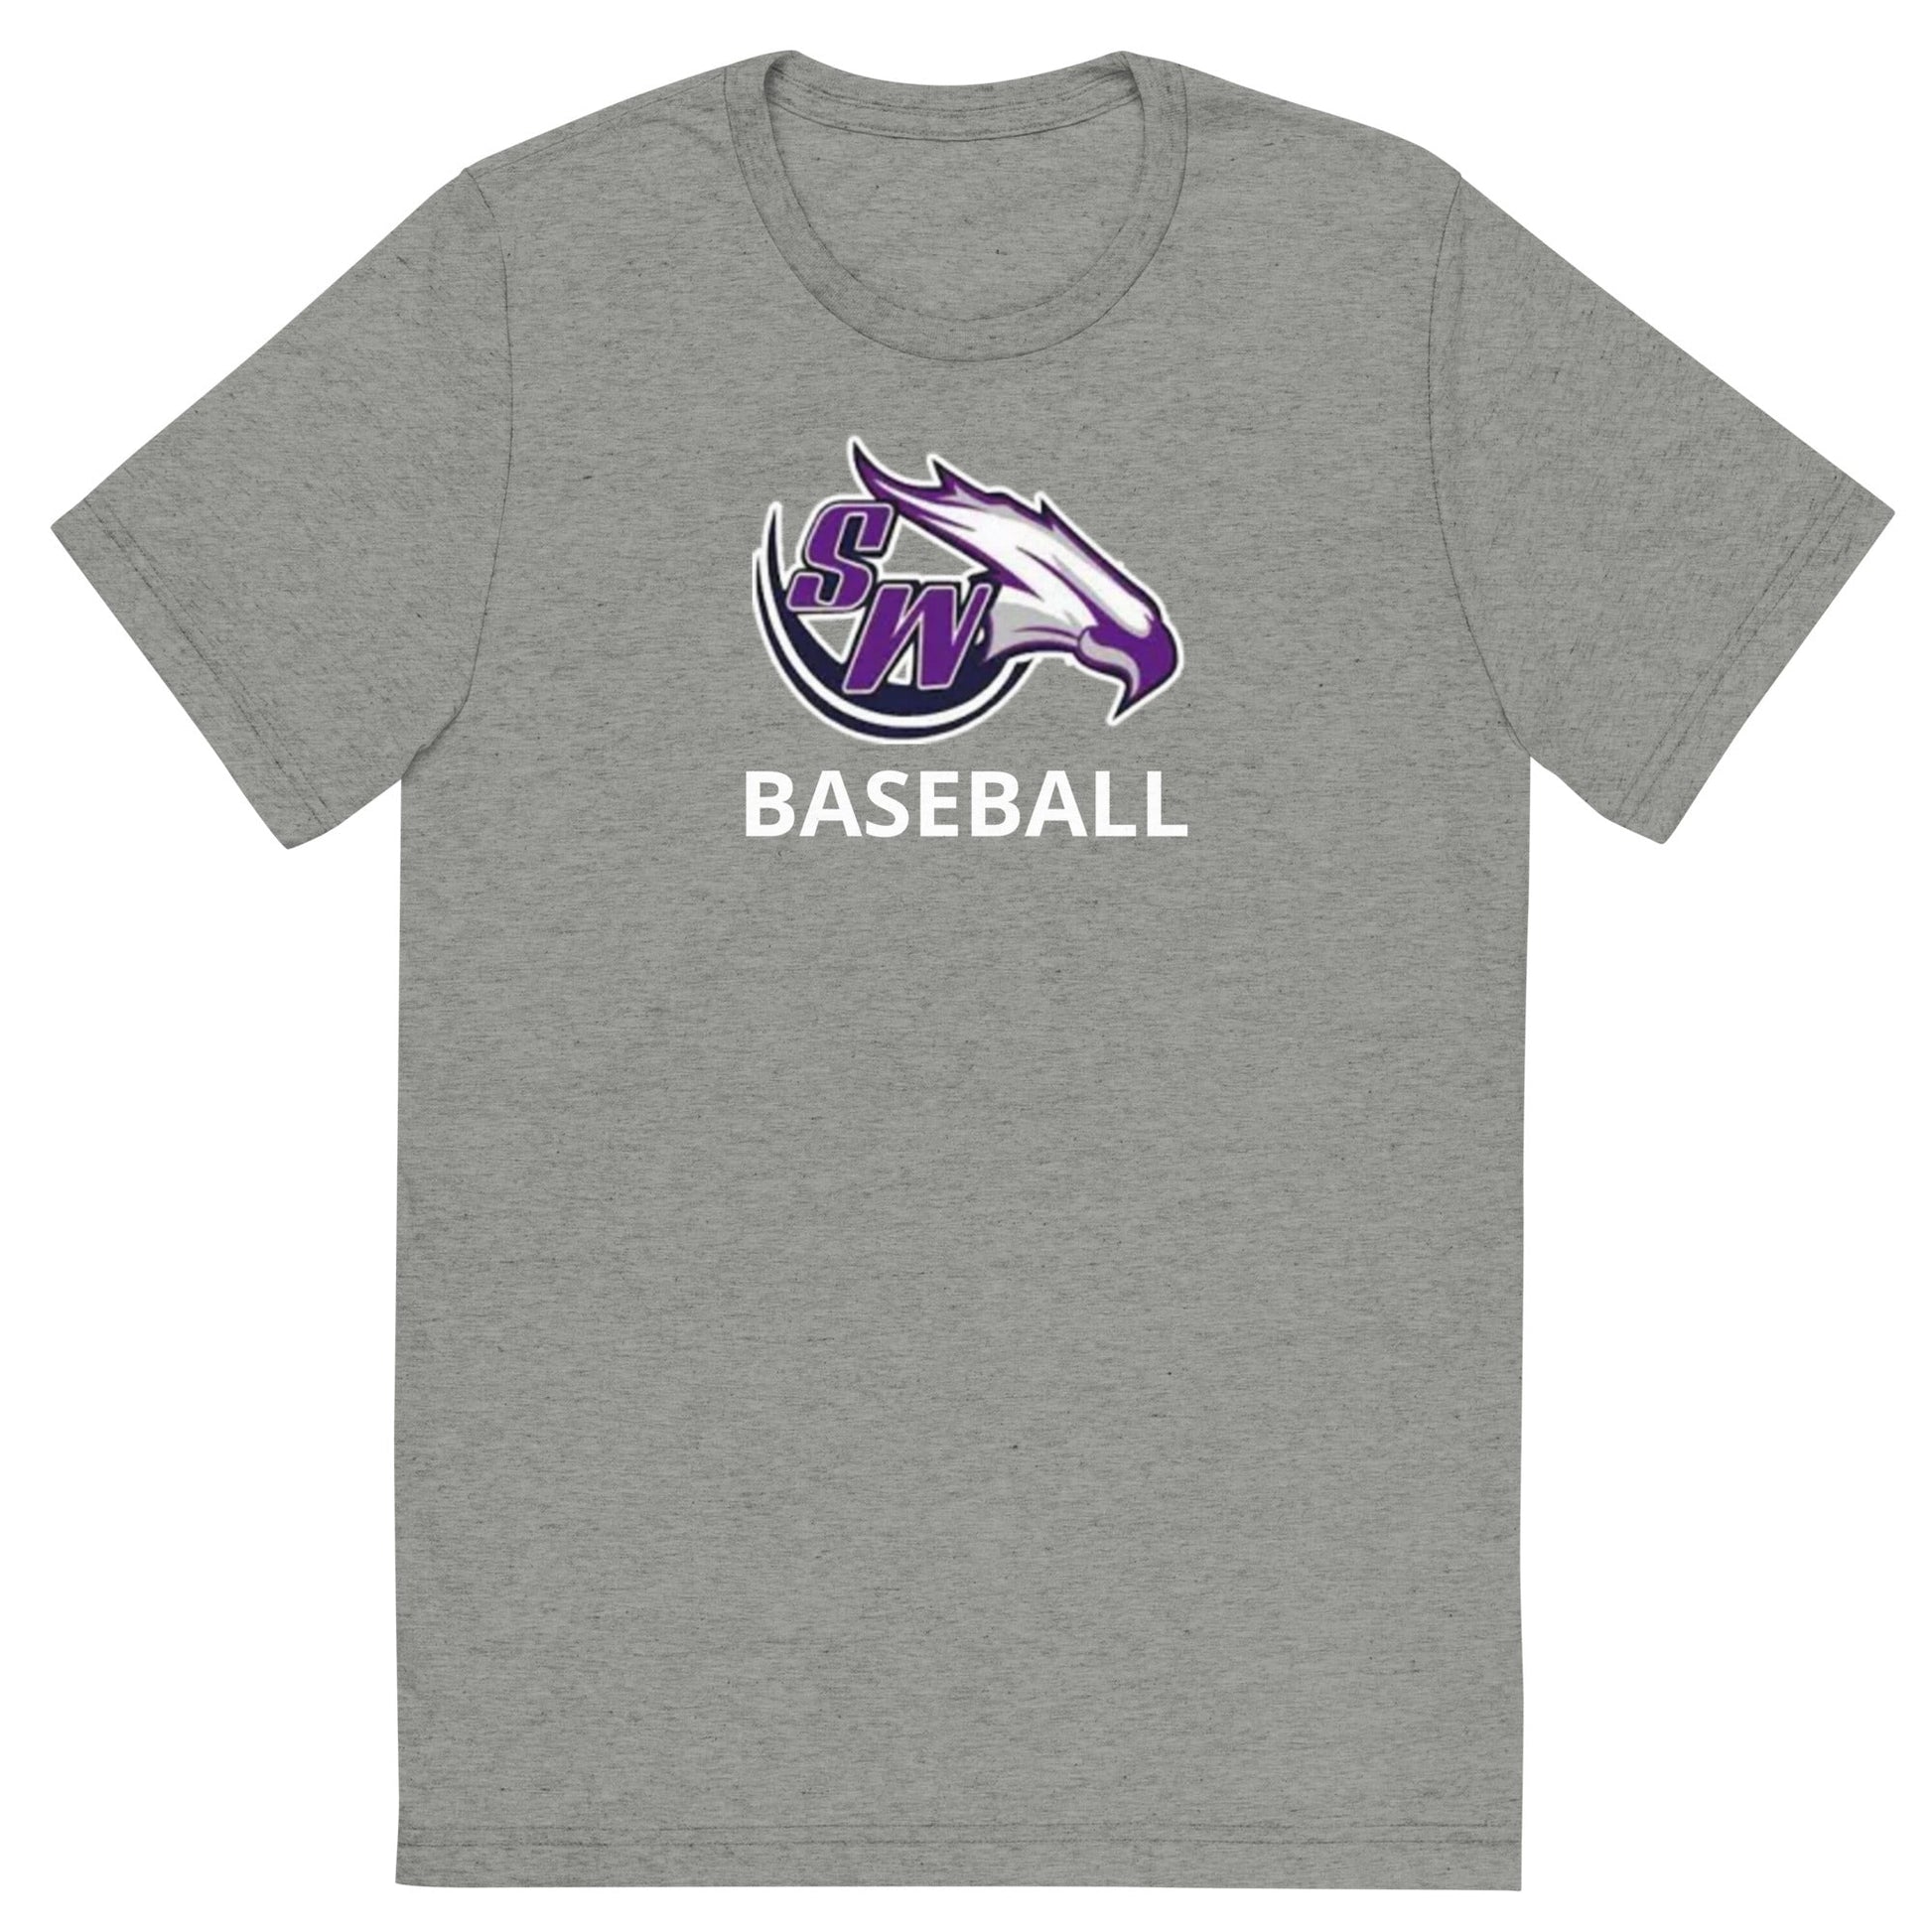 Southwest Baseball Short sleeve t-shirt Bat Club USA